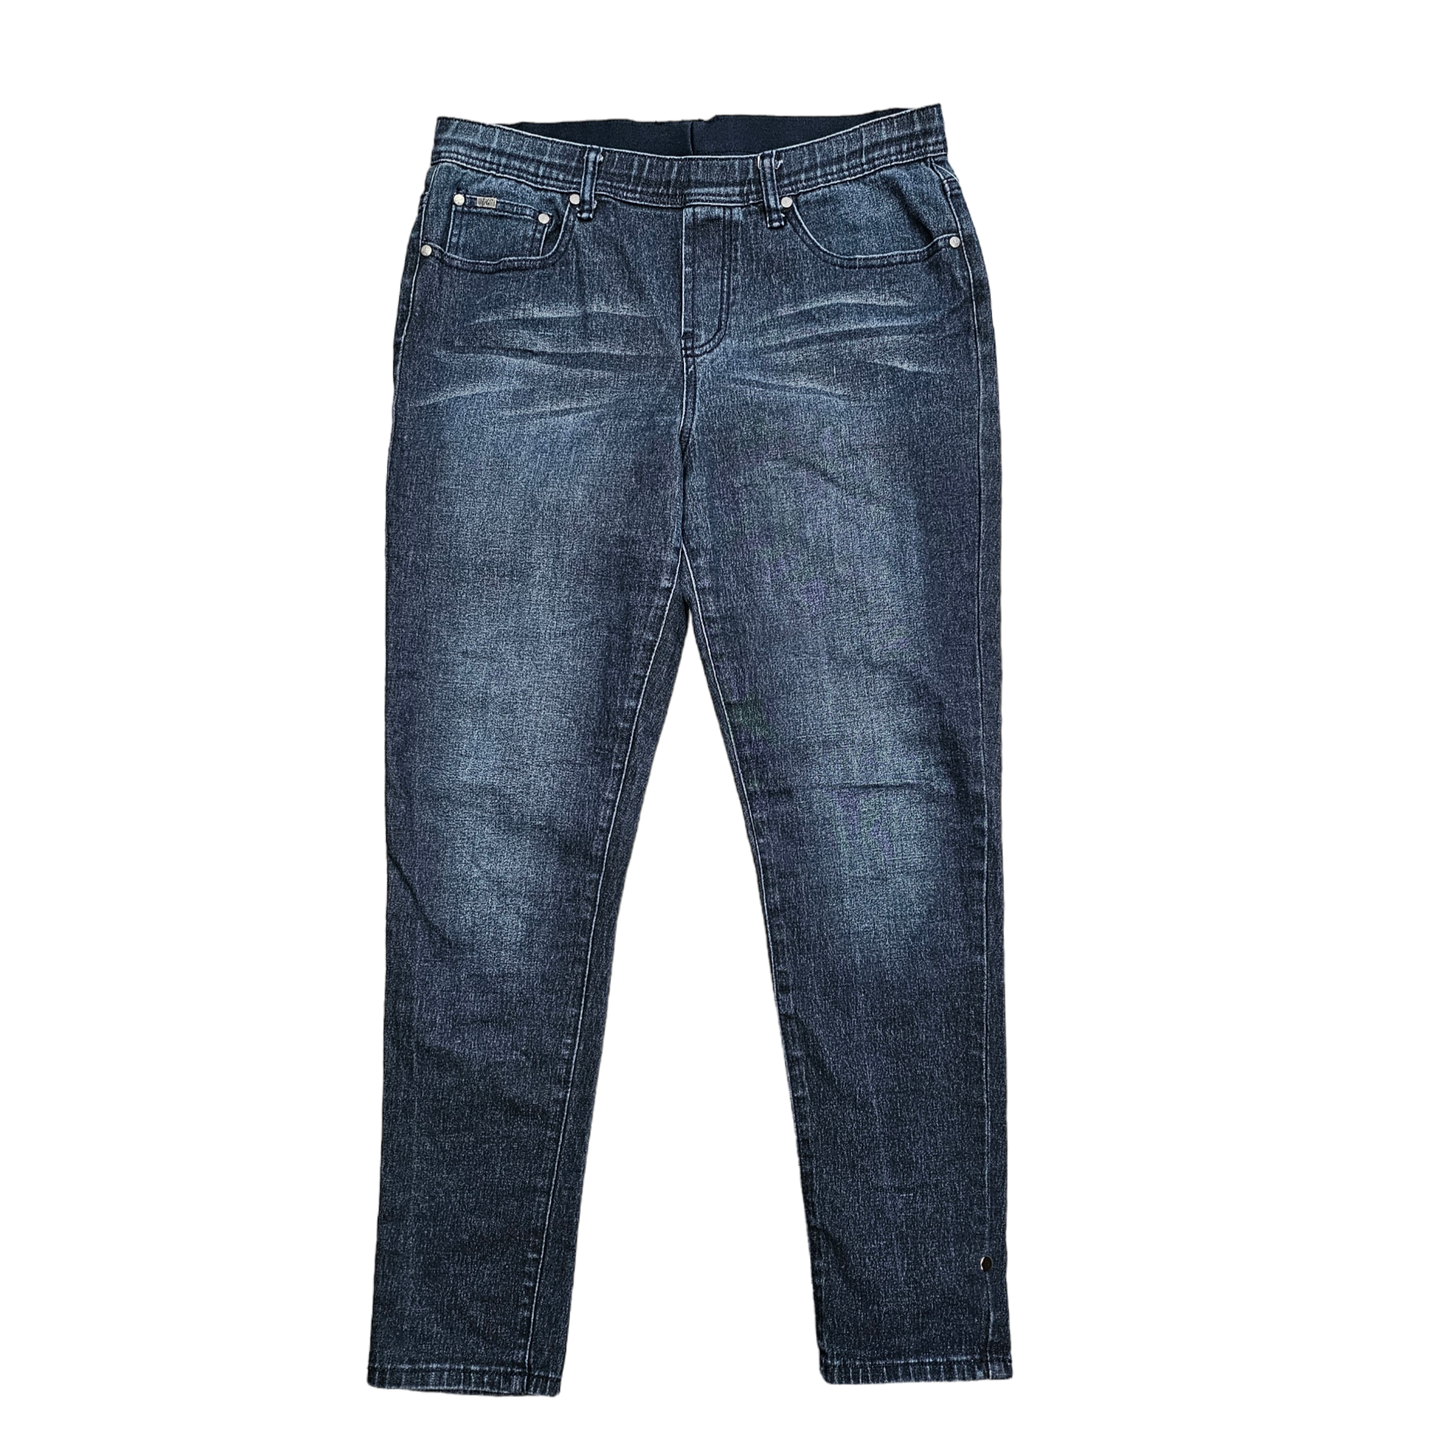 Jeans Skinny By Diane Gilman  Size: M